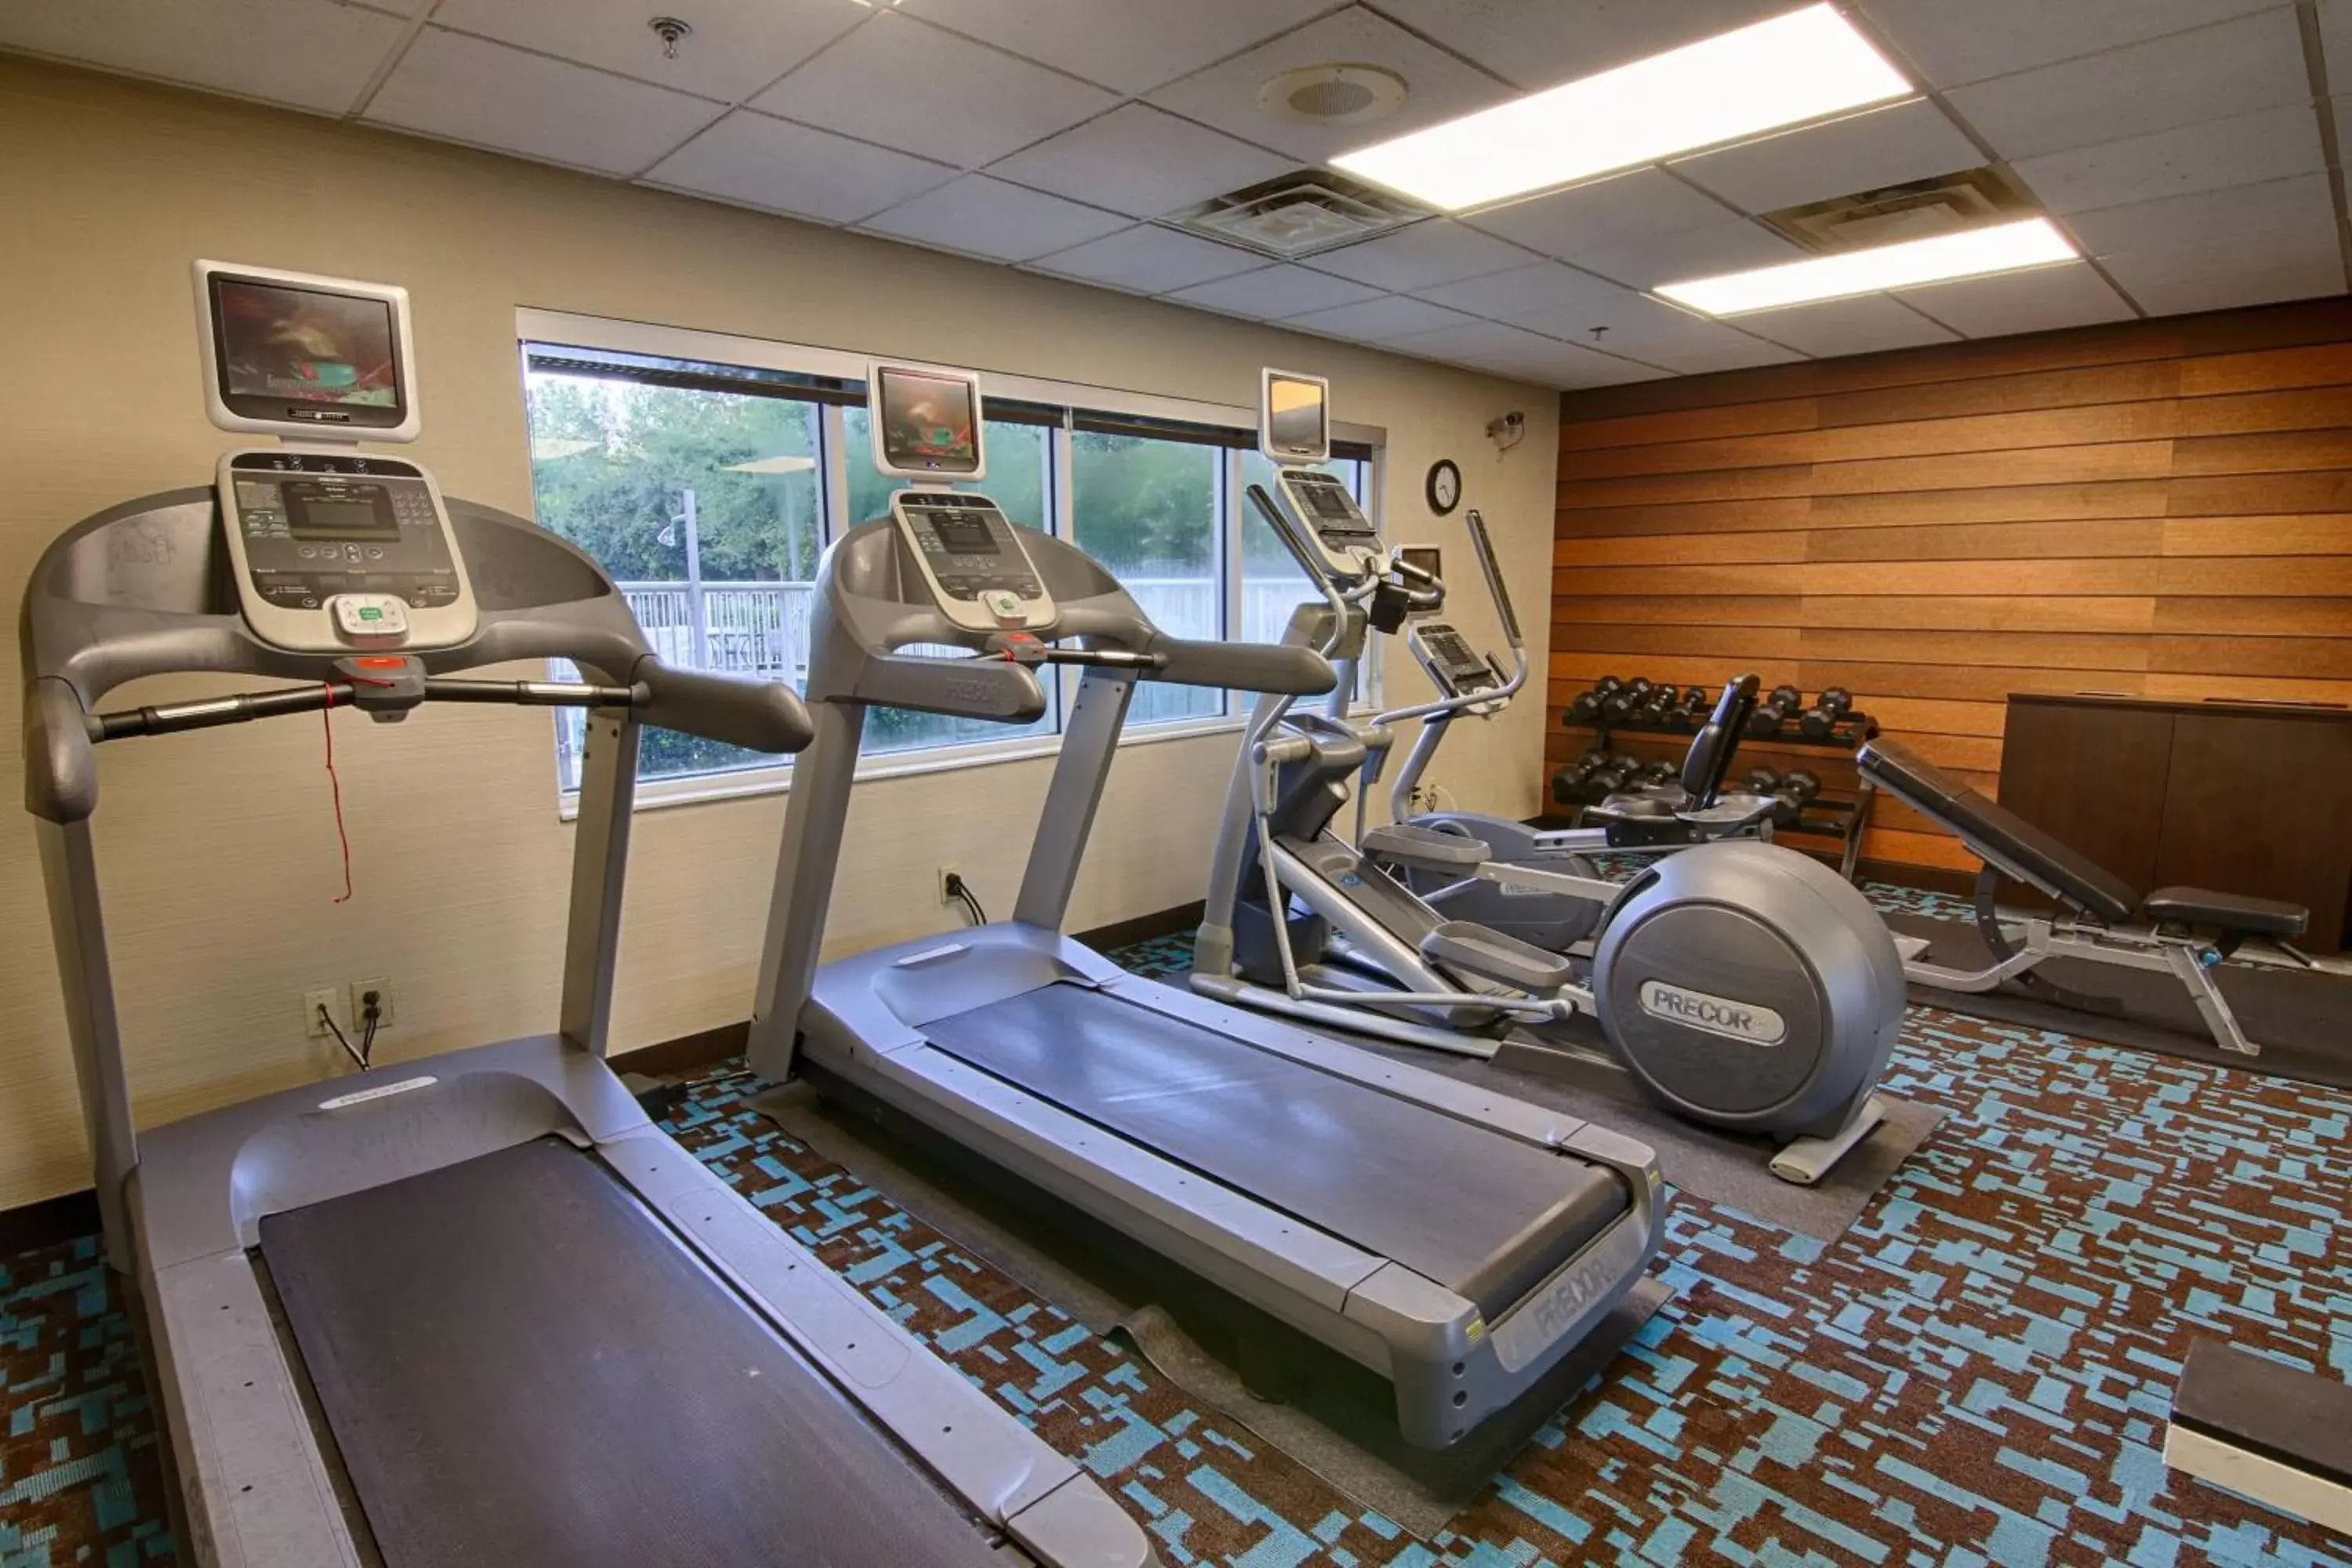 Fitness centre/facilities, Fitness Center/Facilities in Fairfield Inn & Suites Jacksonville Airport